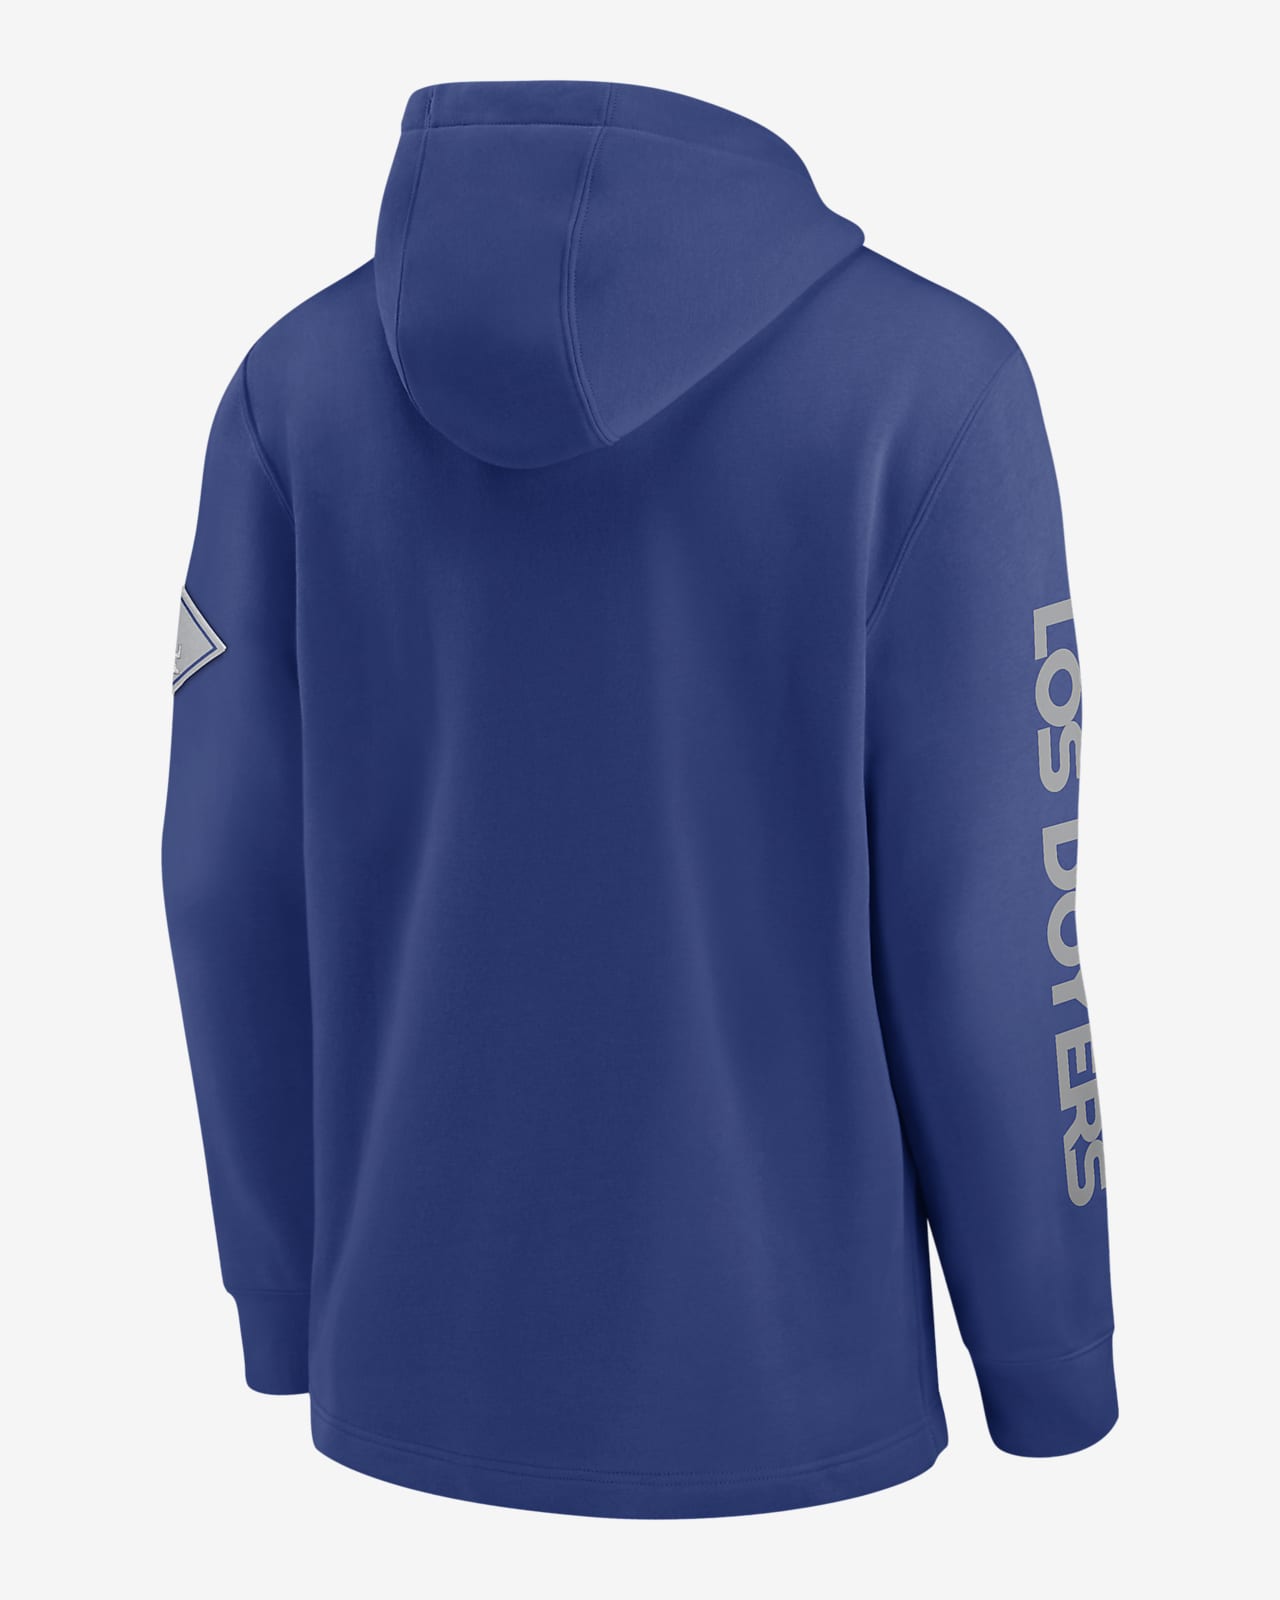 Nike MLB LA Dodgers Hoodie Sweatshirt Men's S Cotton Blend Blue/Gray Los  Angeles